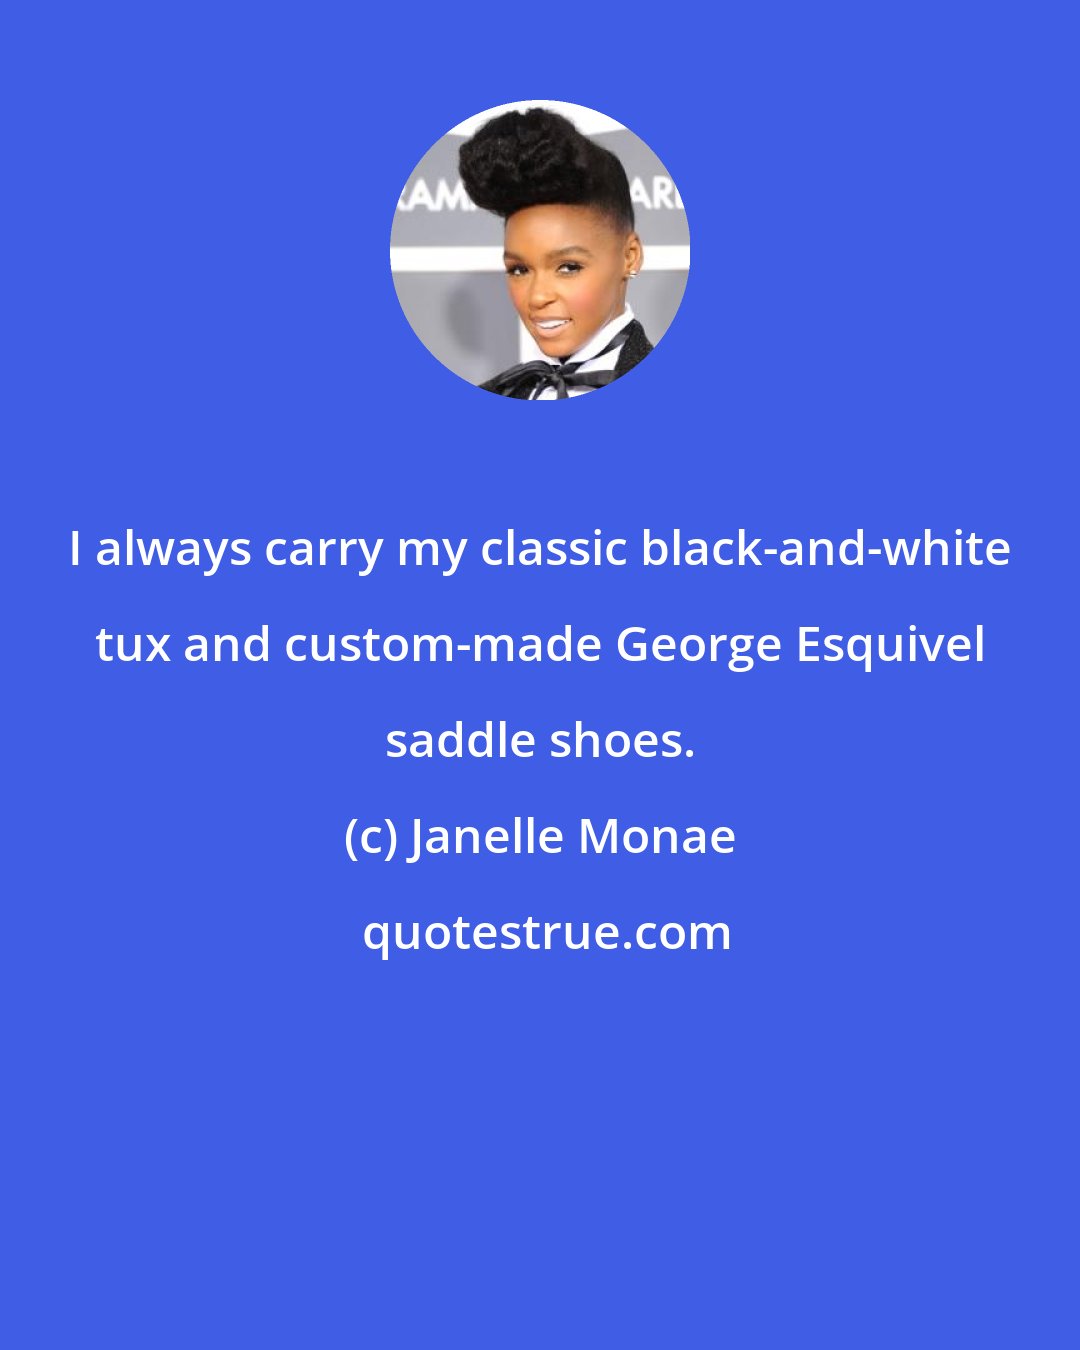 Janelle Monae: I always carry my classic black-and-white tux and custom-made George Esquivel saddle shoes.